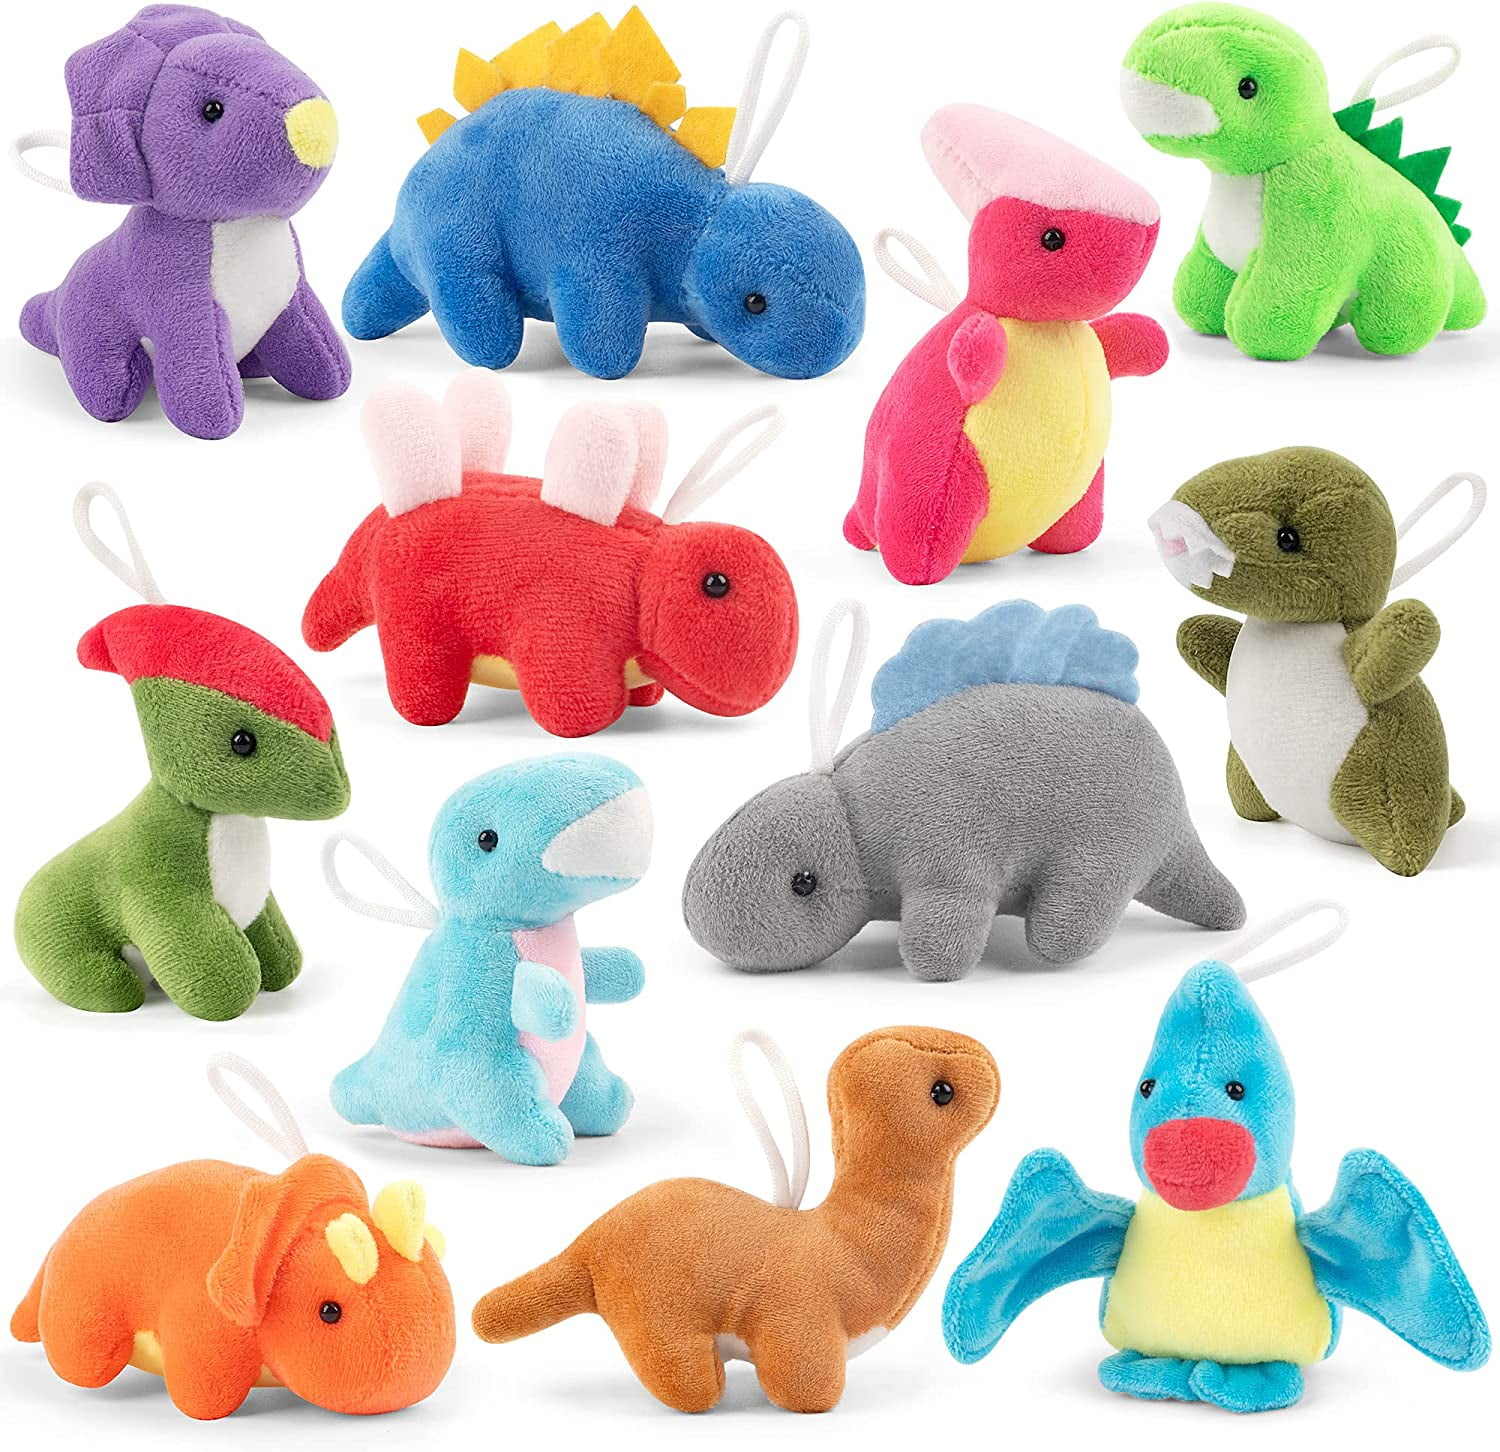 Dinosaur Kids Party Favor Bag DIY Keychain Kit Kids Birthday Dino